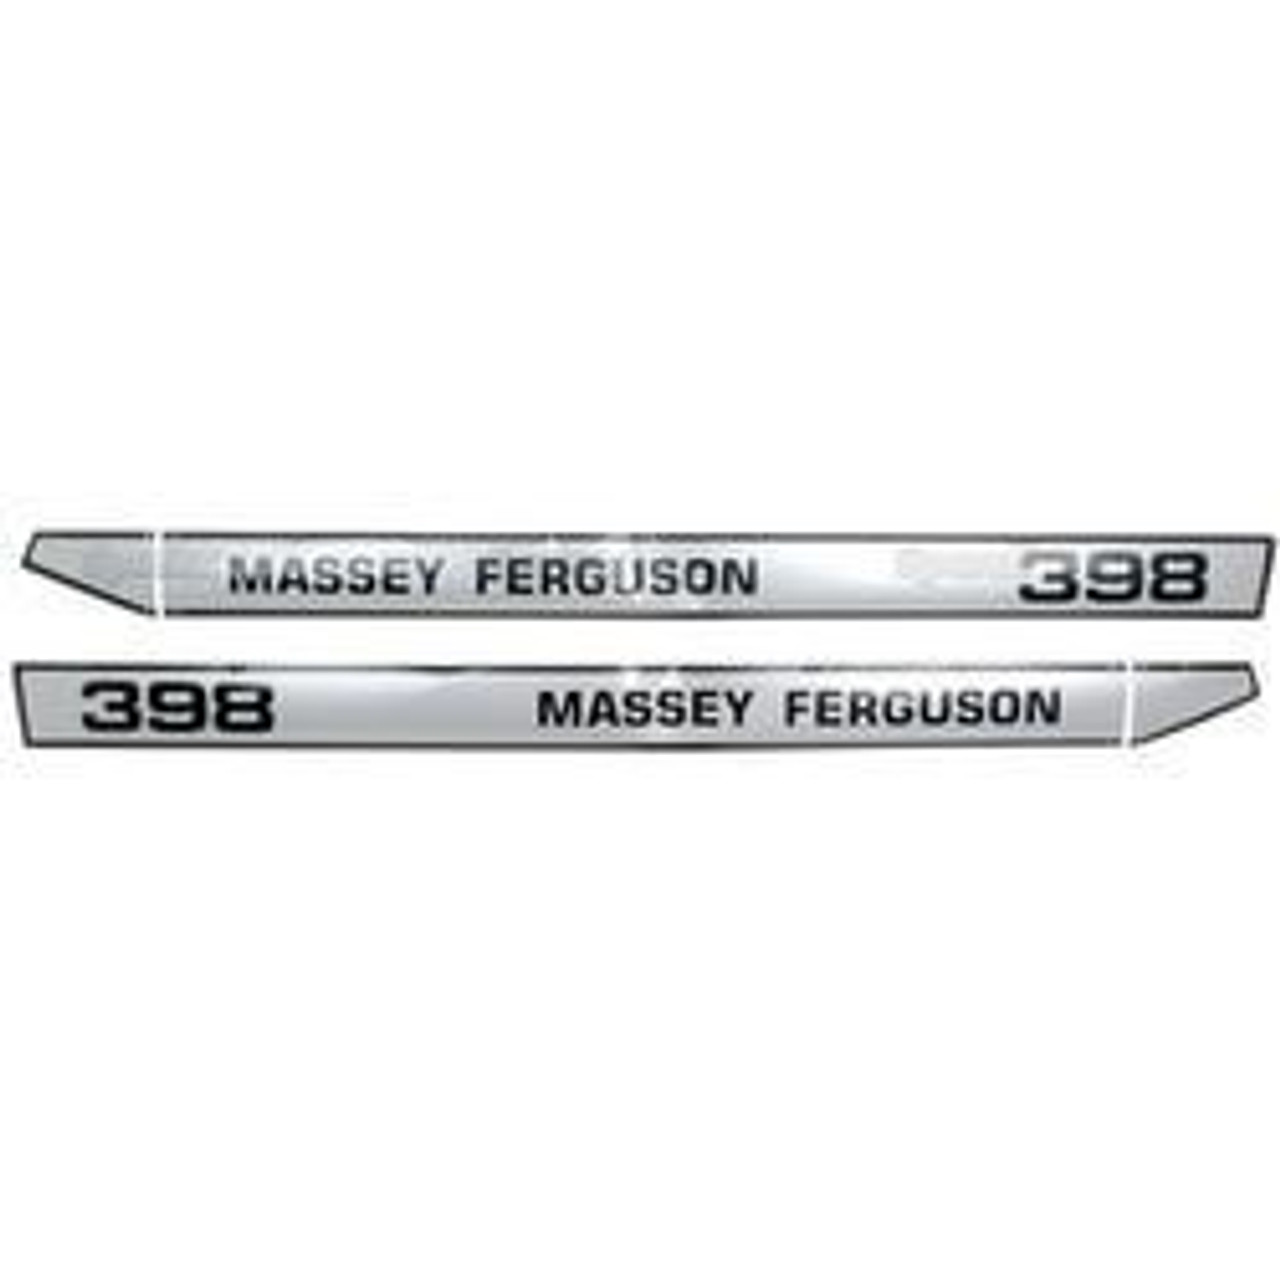 New Massey Ferguson 398 Decal Set